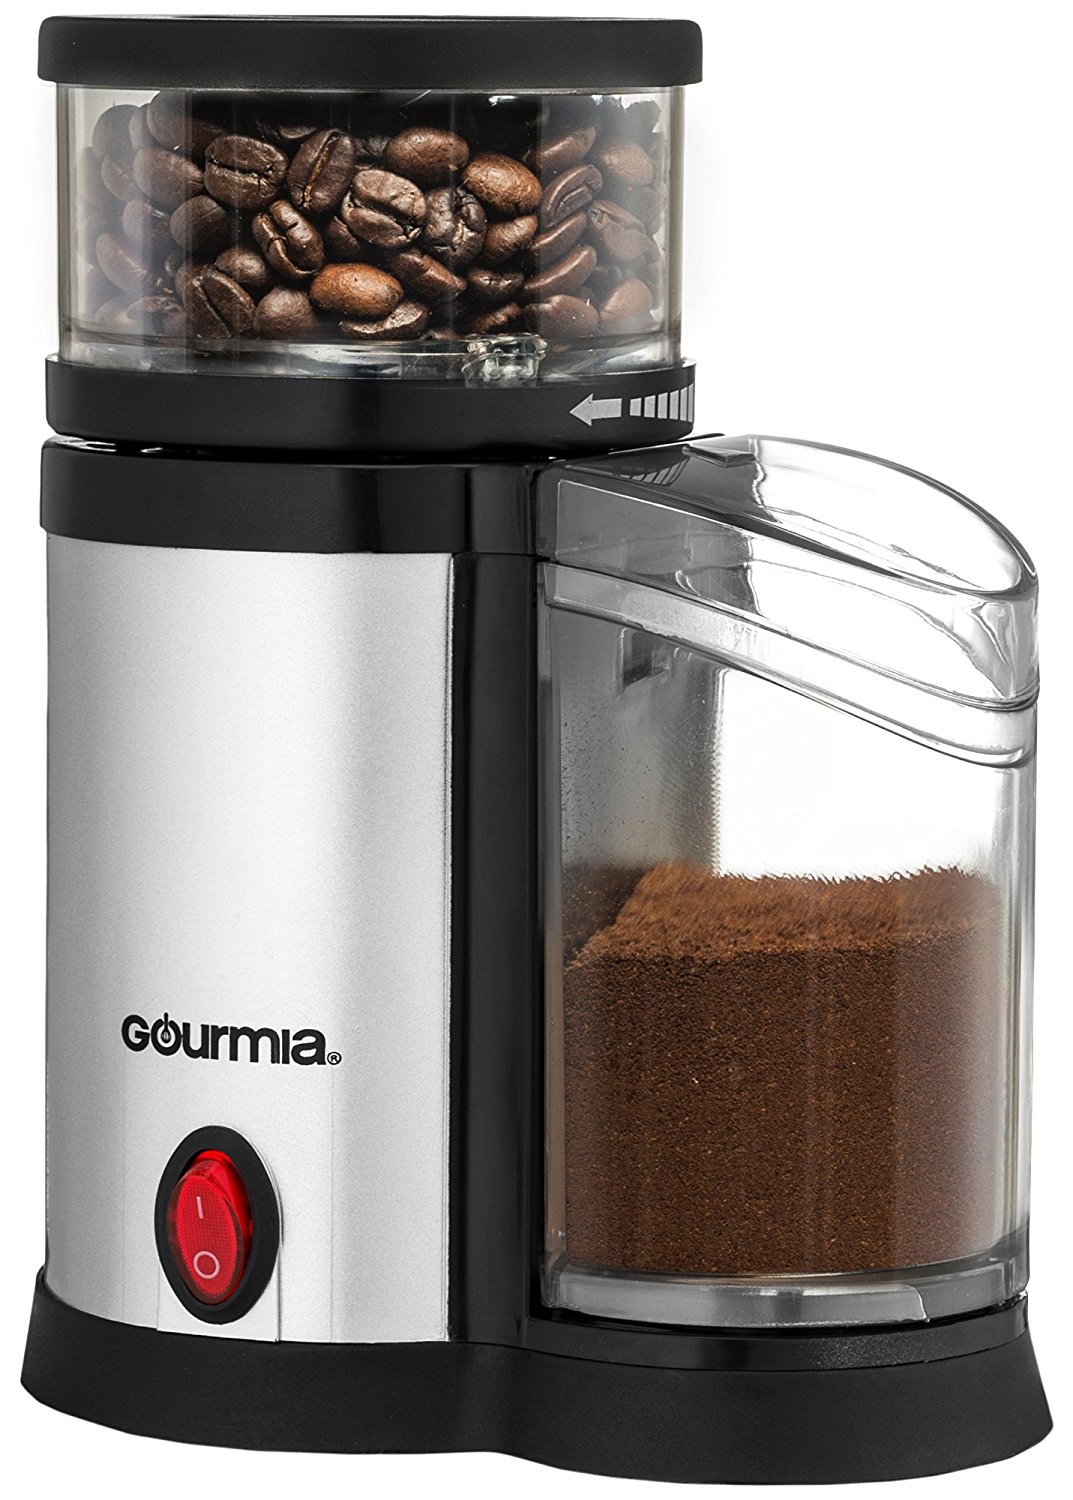 Gourmia GCG165 Compact Electric Burr Coffee Grinder